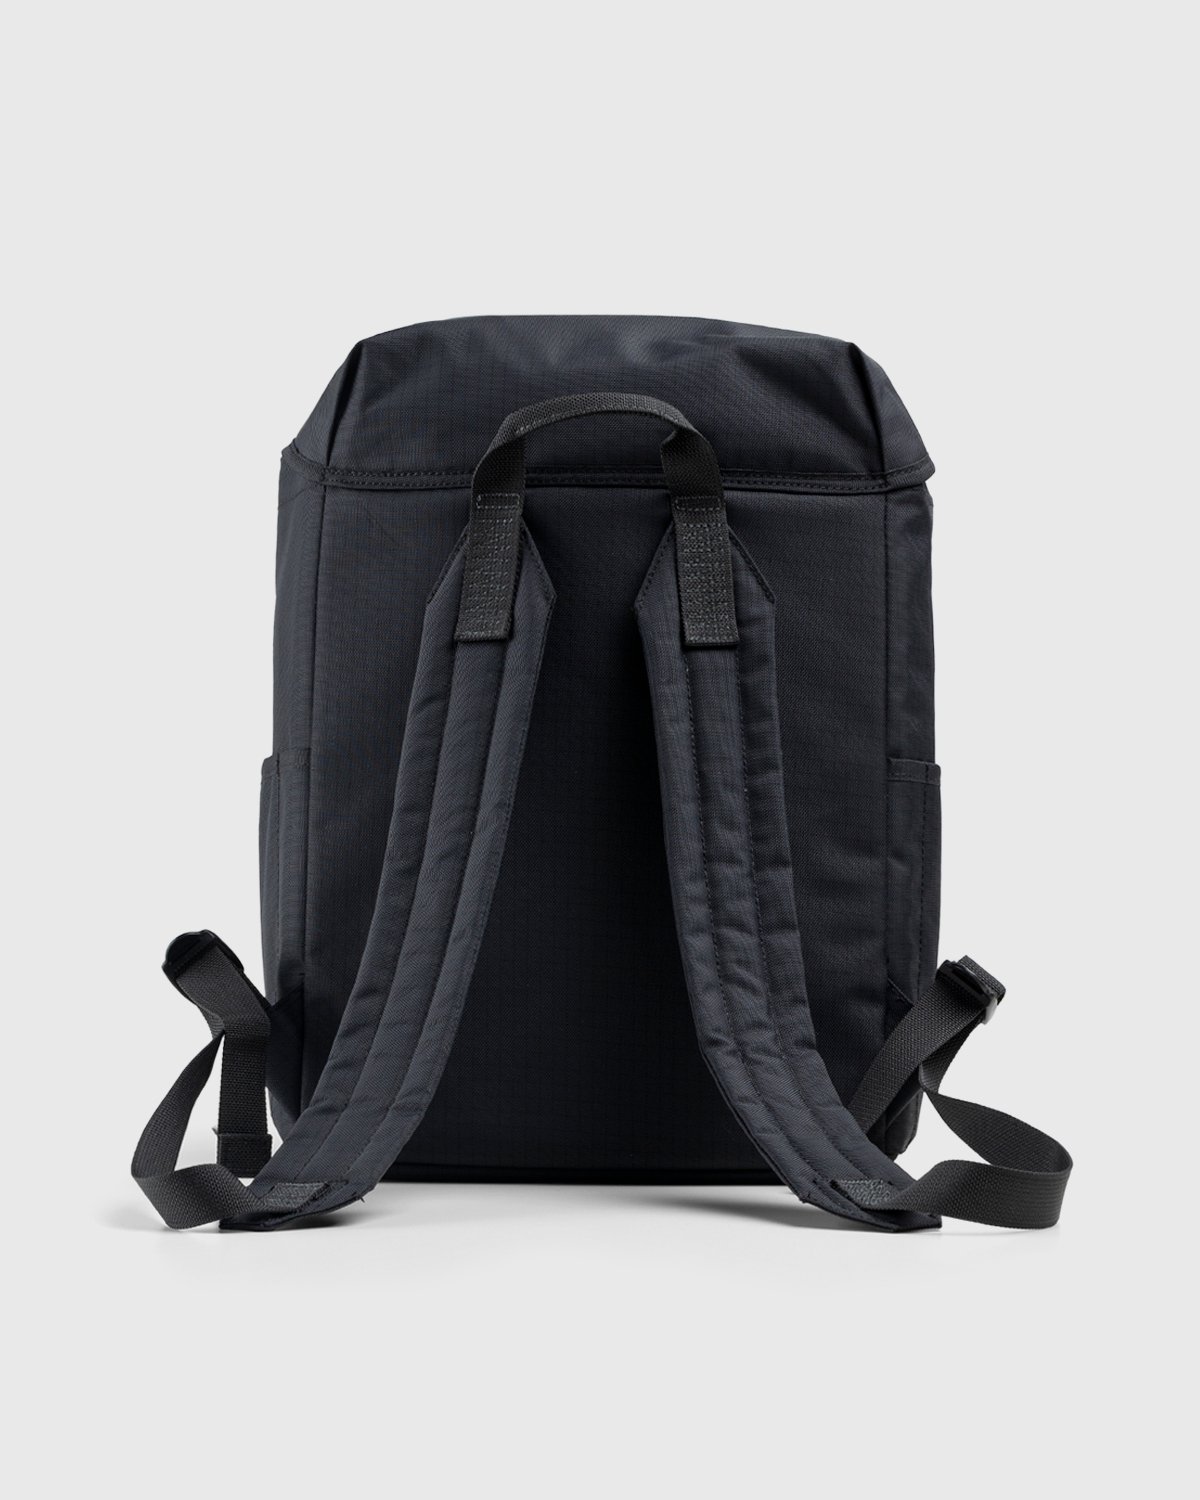 Acne Studios - Large Ripstop Backpack Black/Khaki Green - Accessories - Black - Image 3